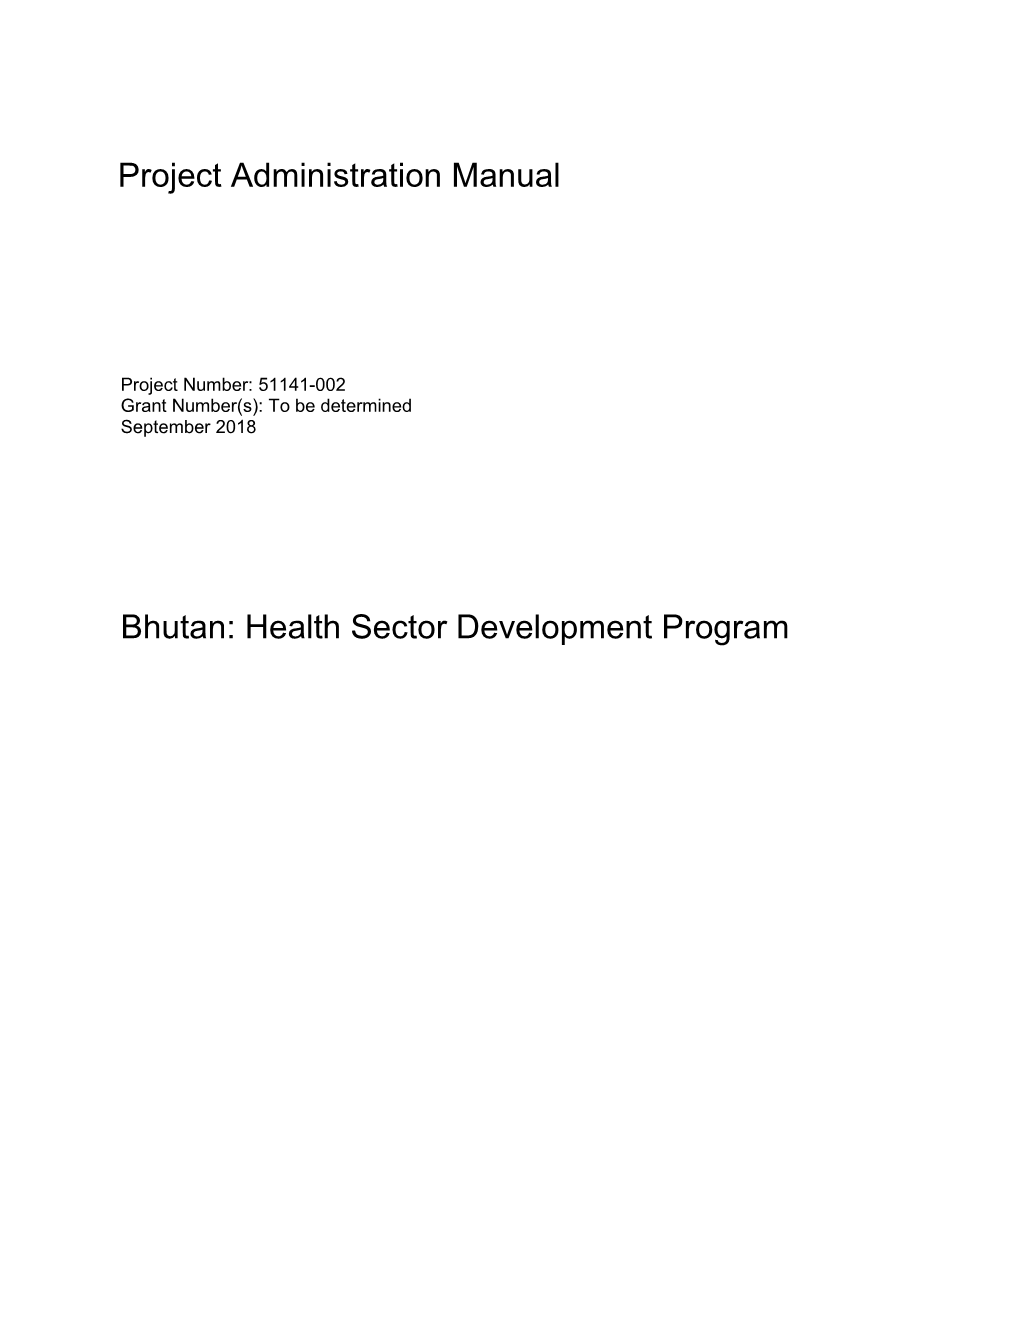 Health Sector Development Program: Project Administration Manual